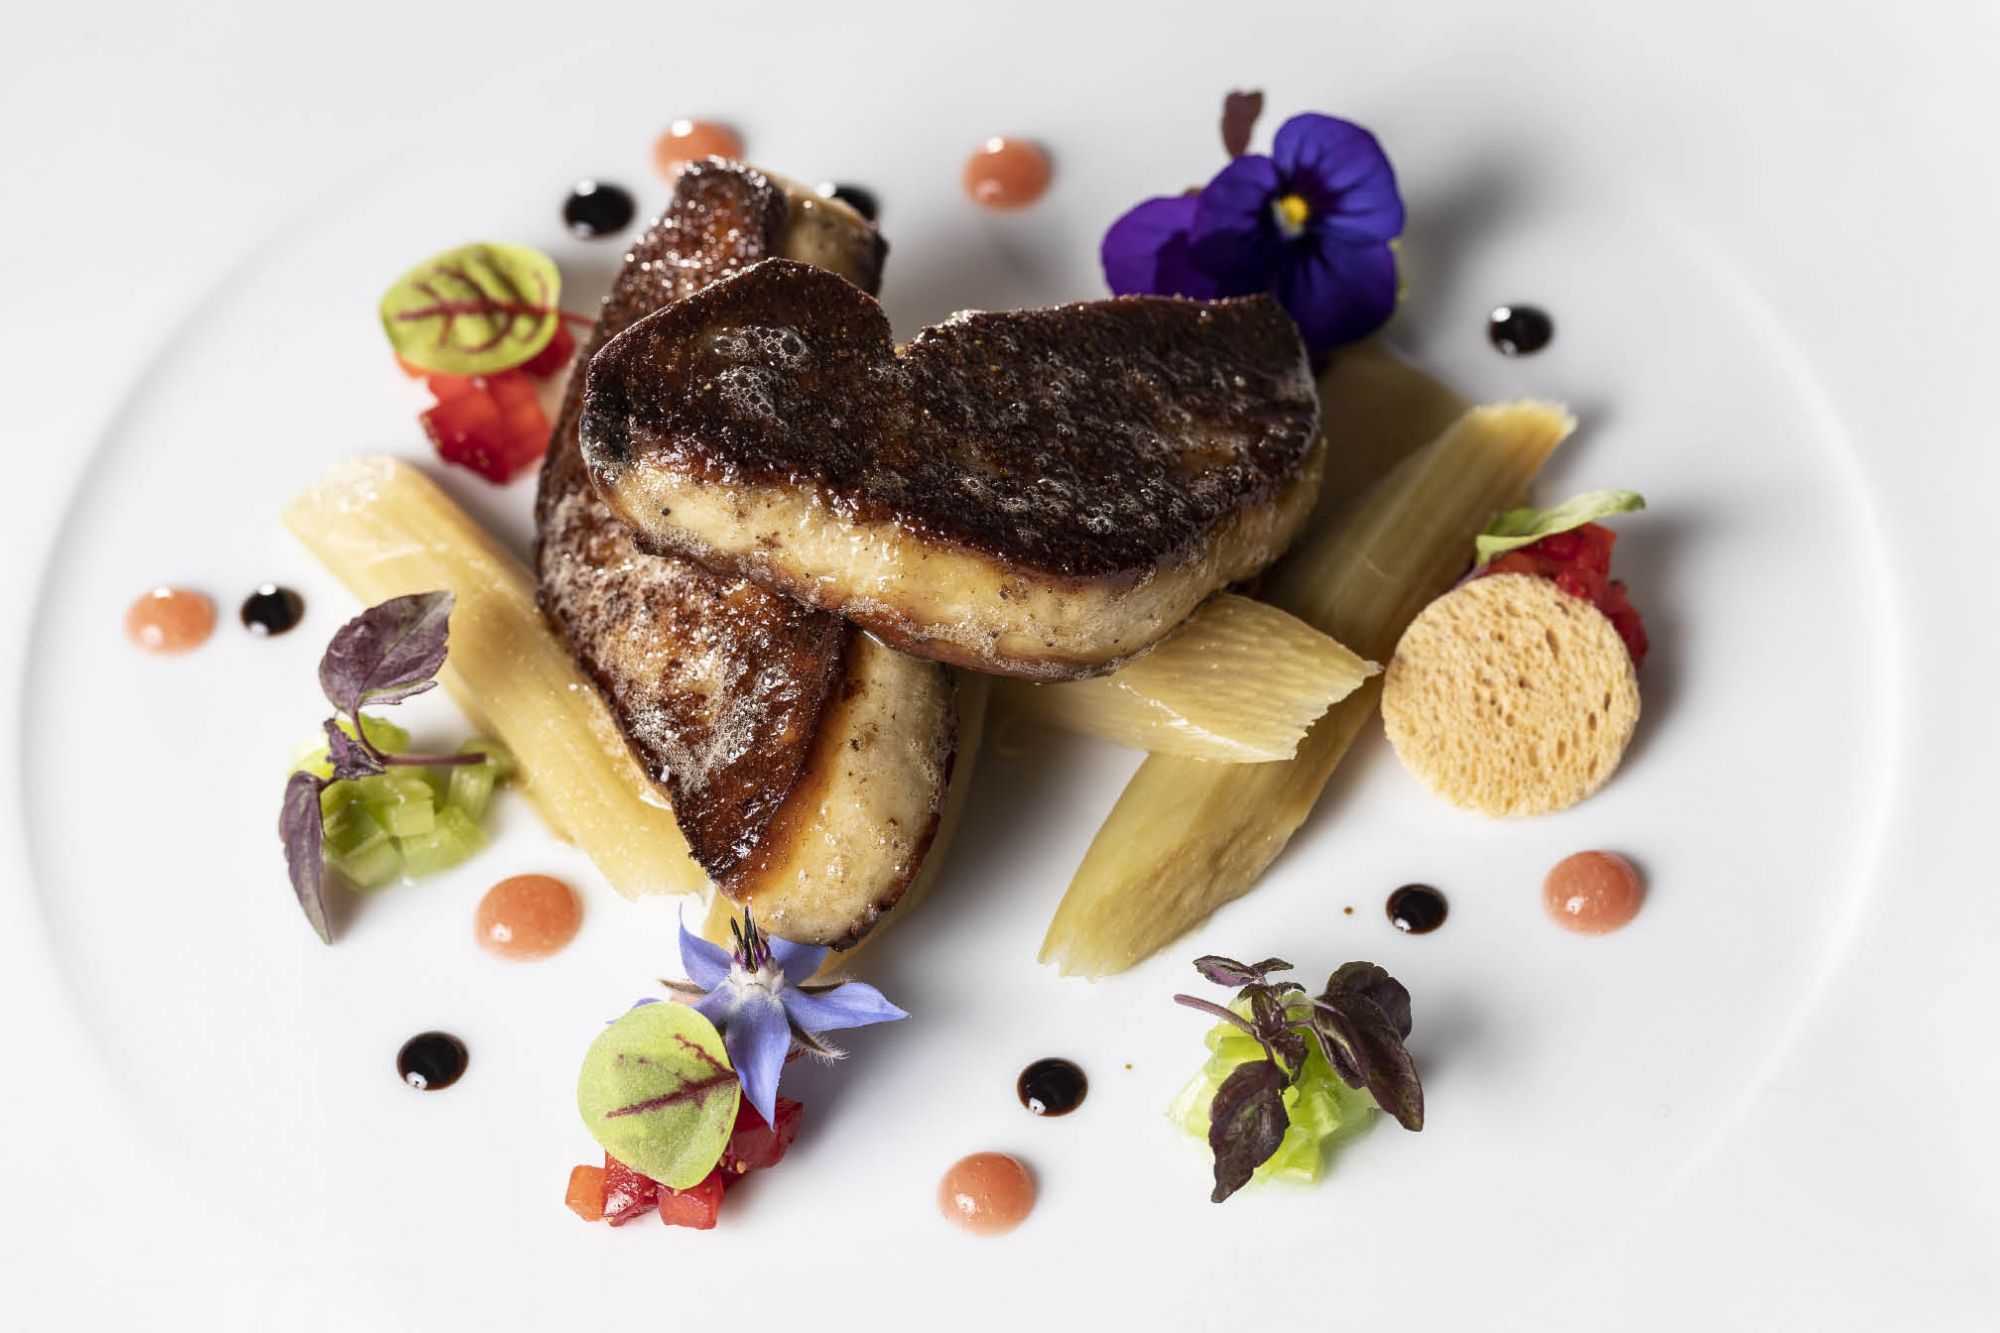 Foie gras de canard poêlé, rhubarbe  confite et crue, fraise